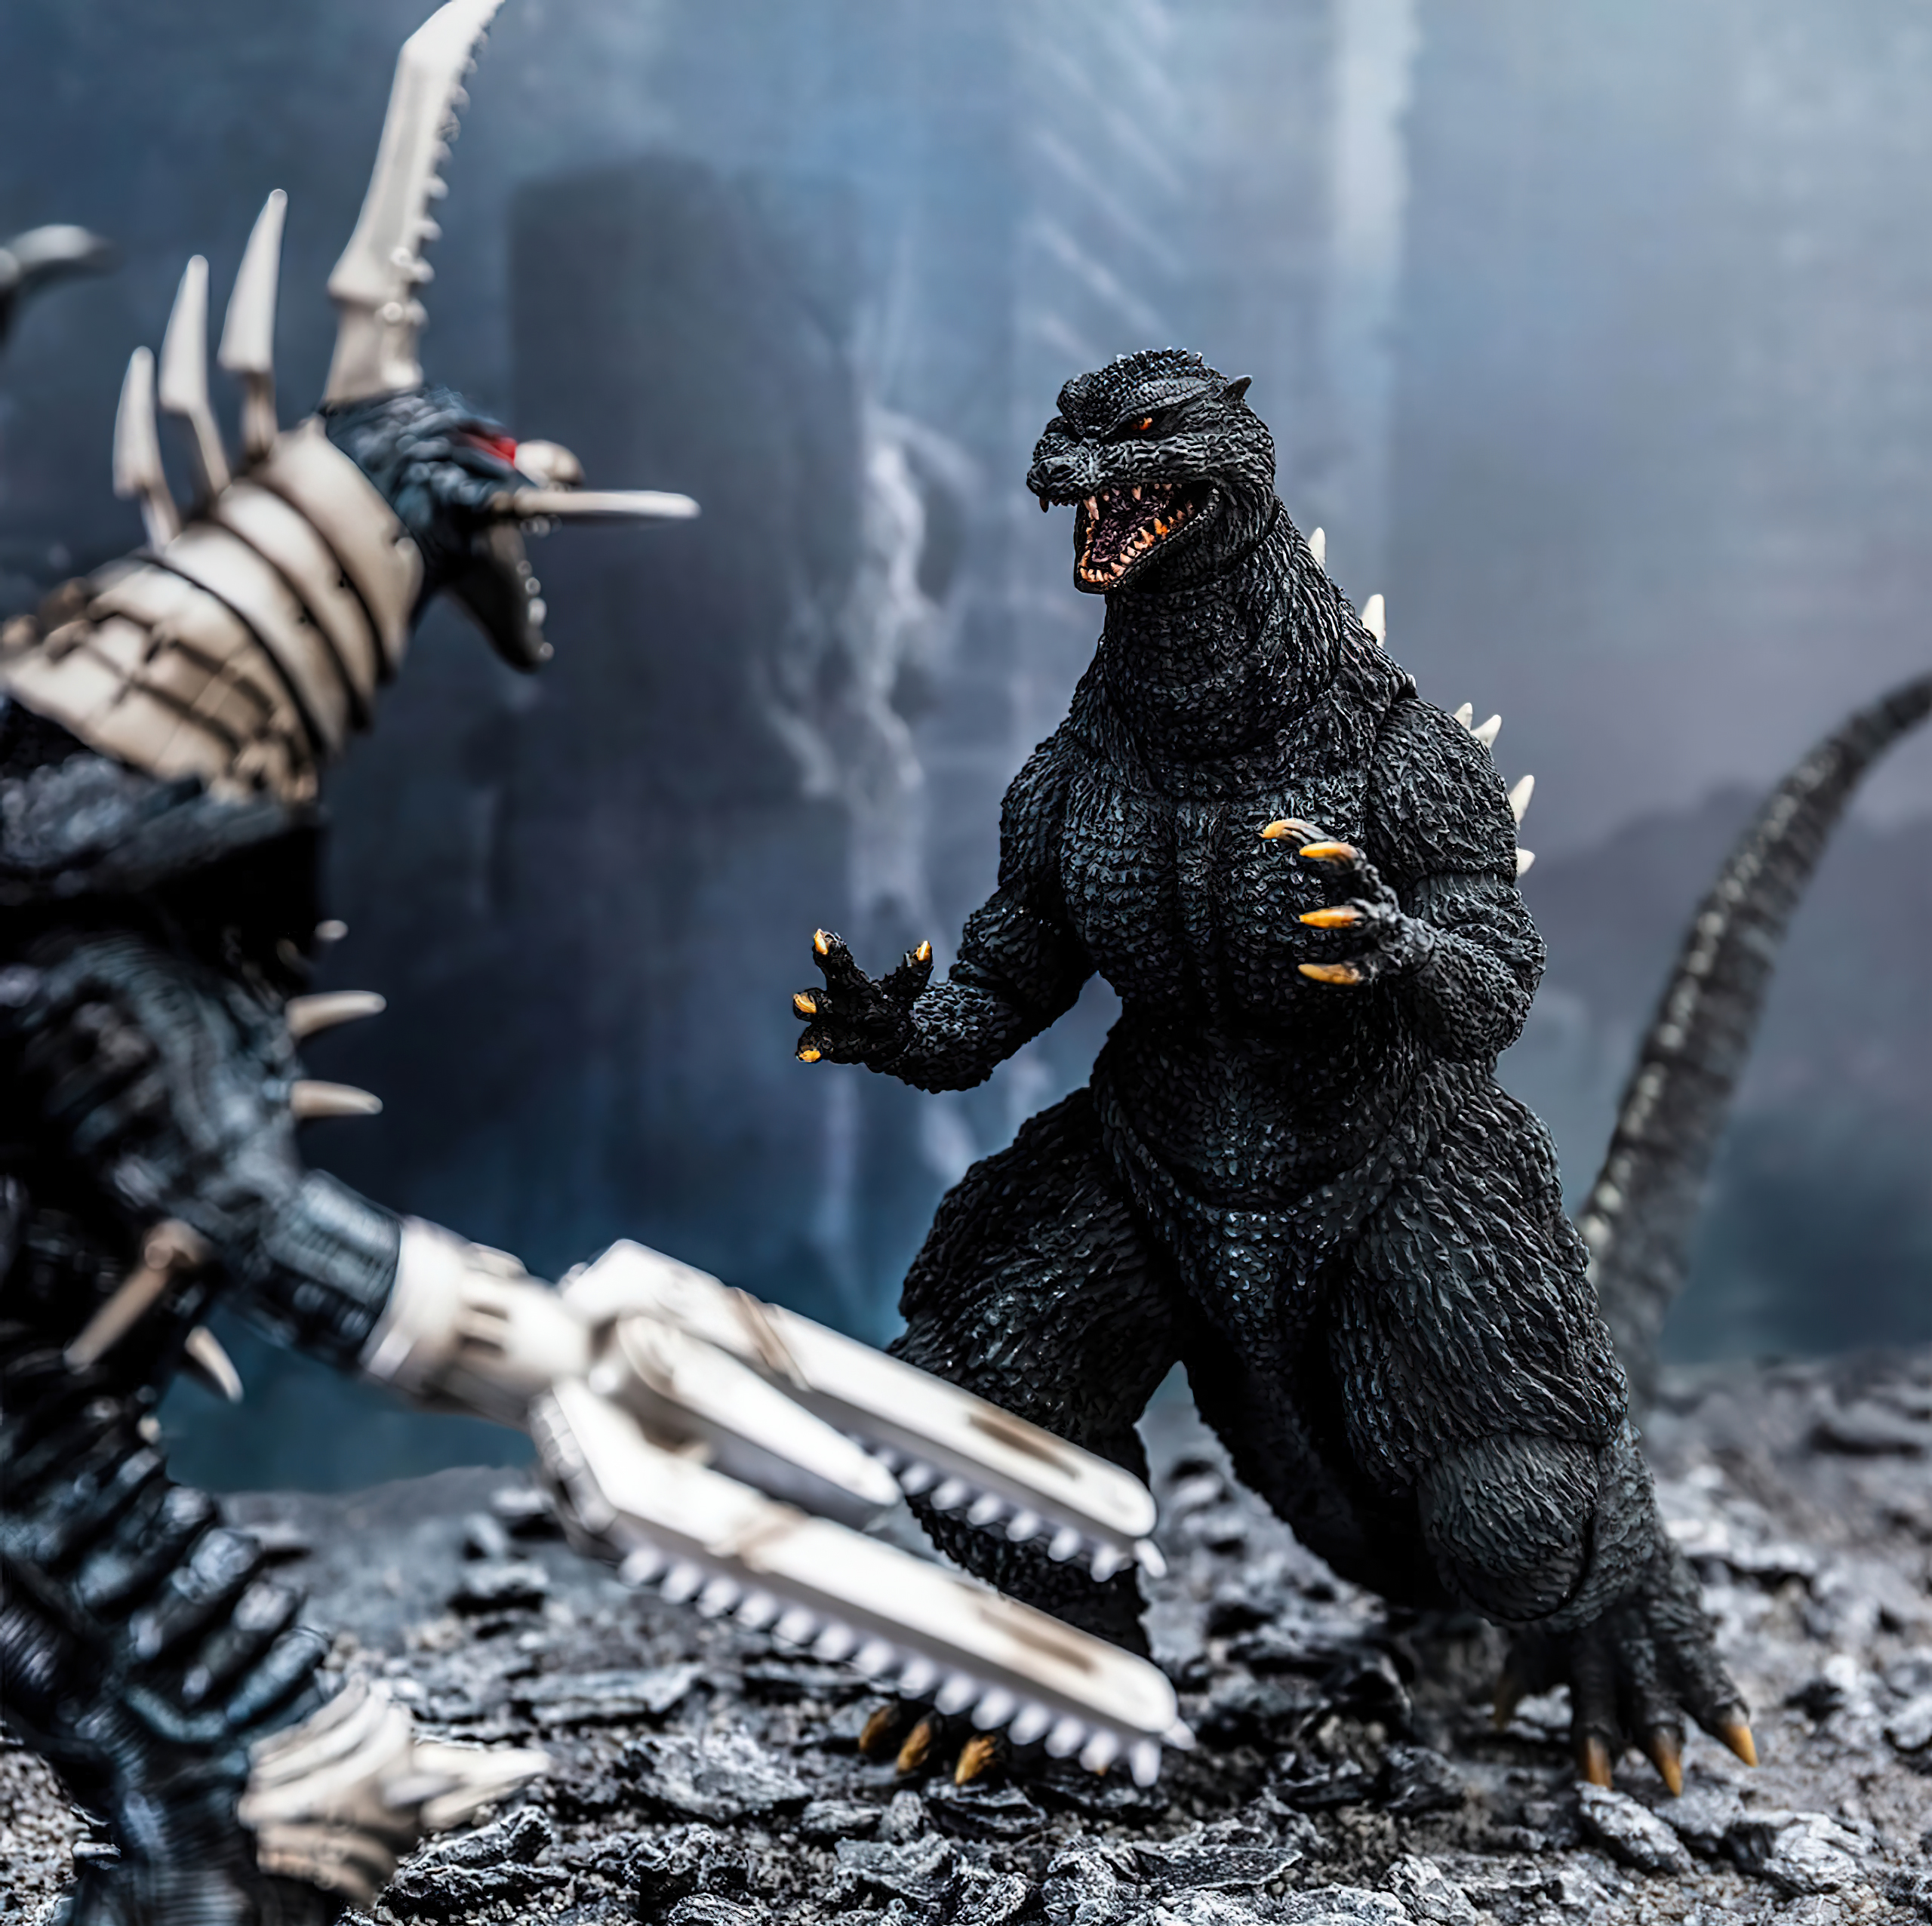 Images of S.H. MonsterArts Final Wars Godzilla Drop!